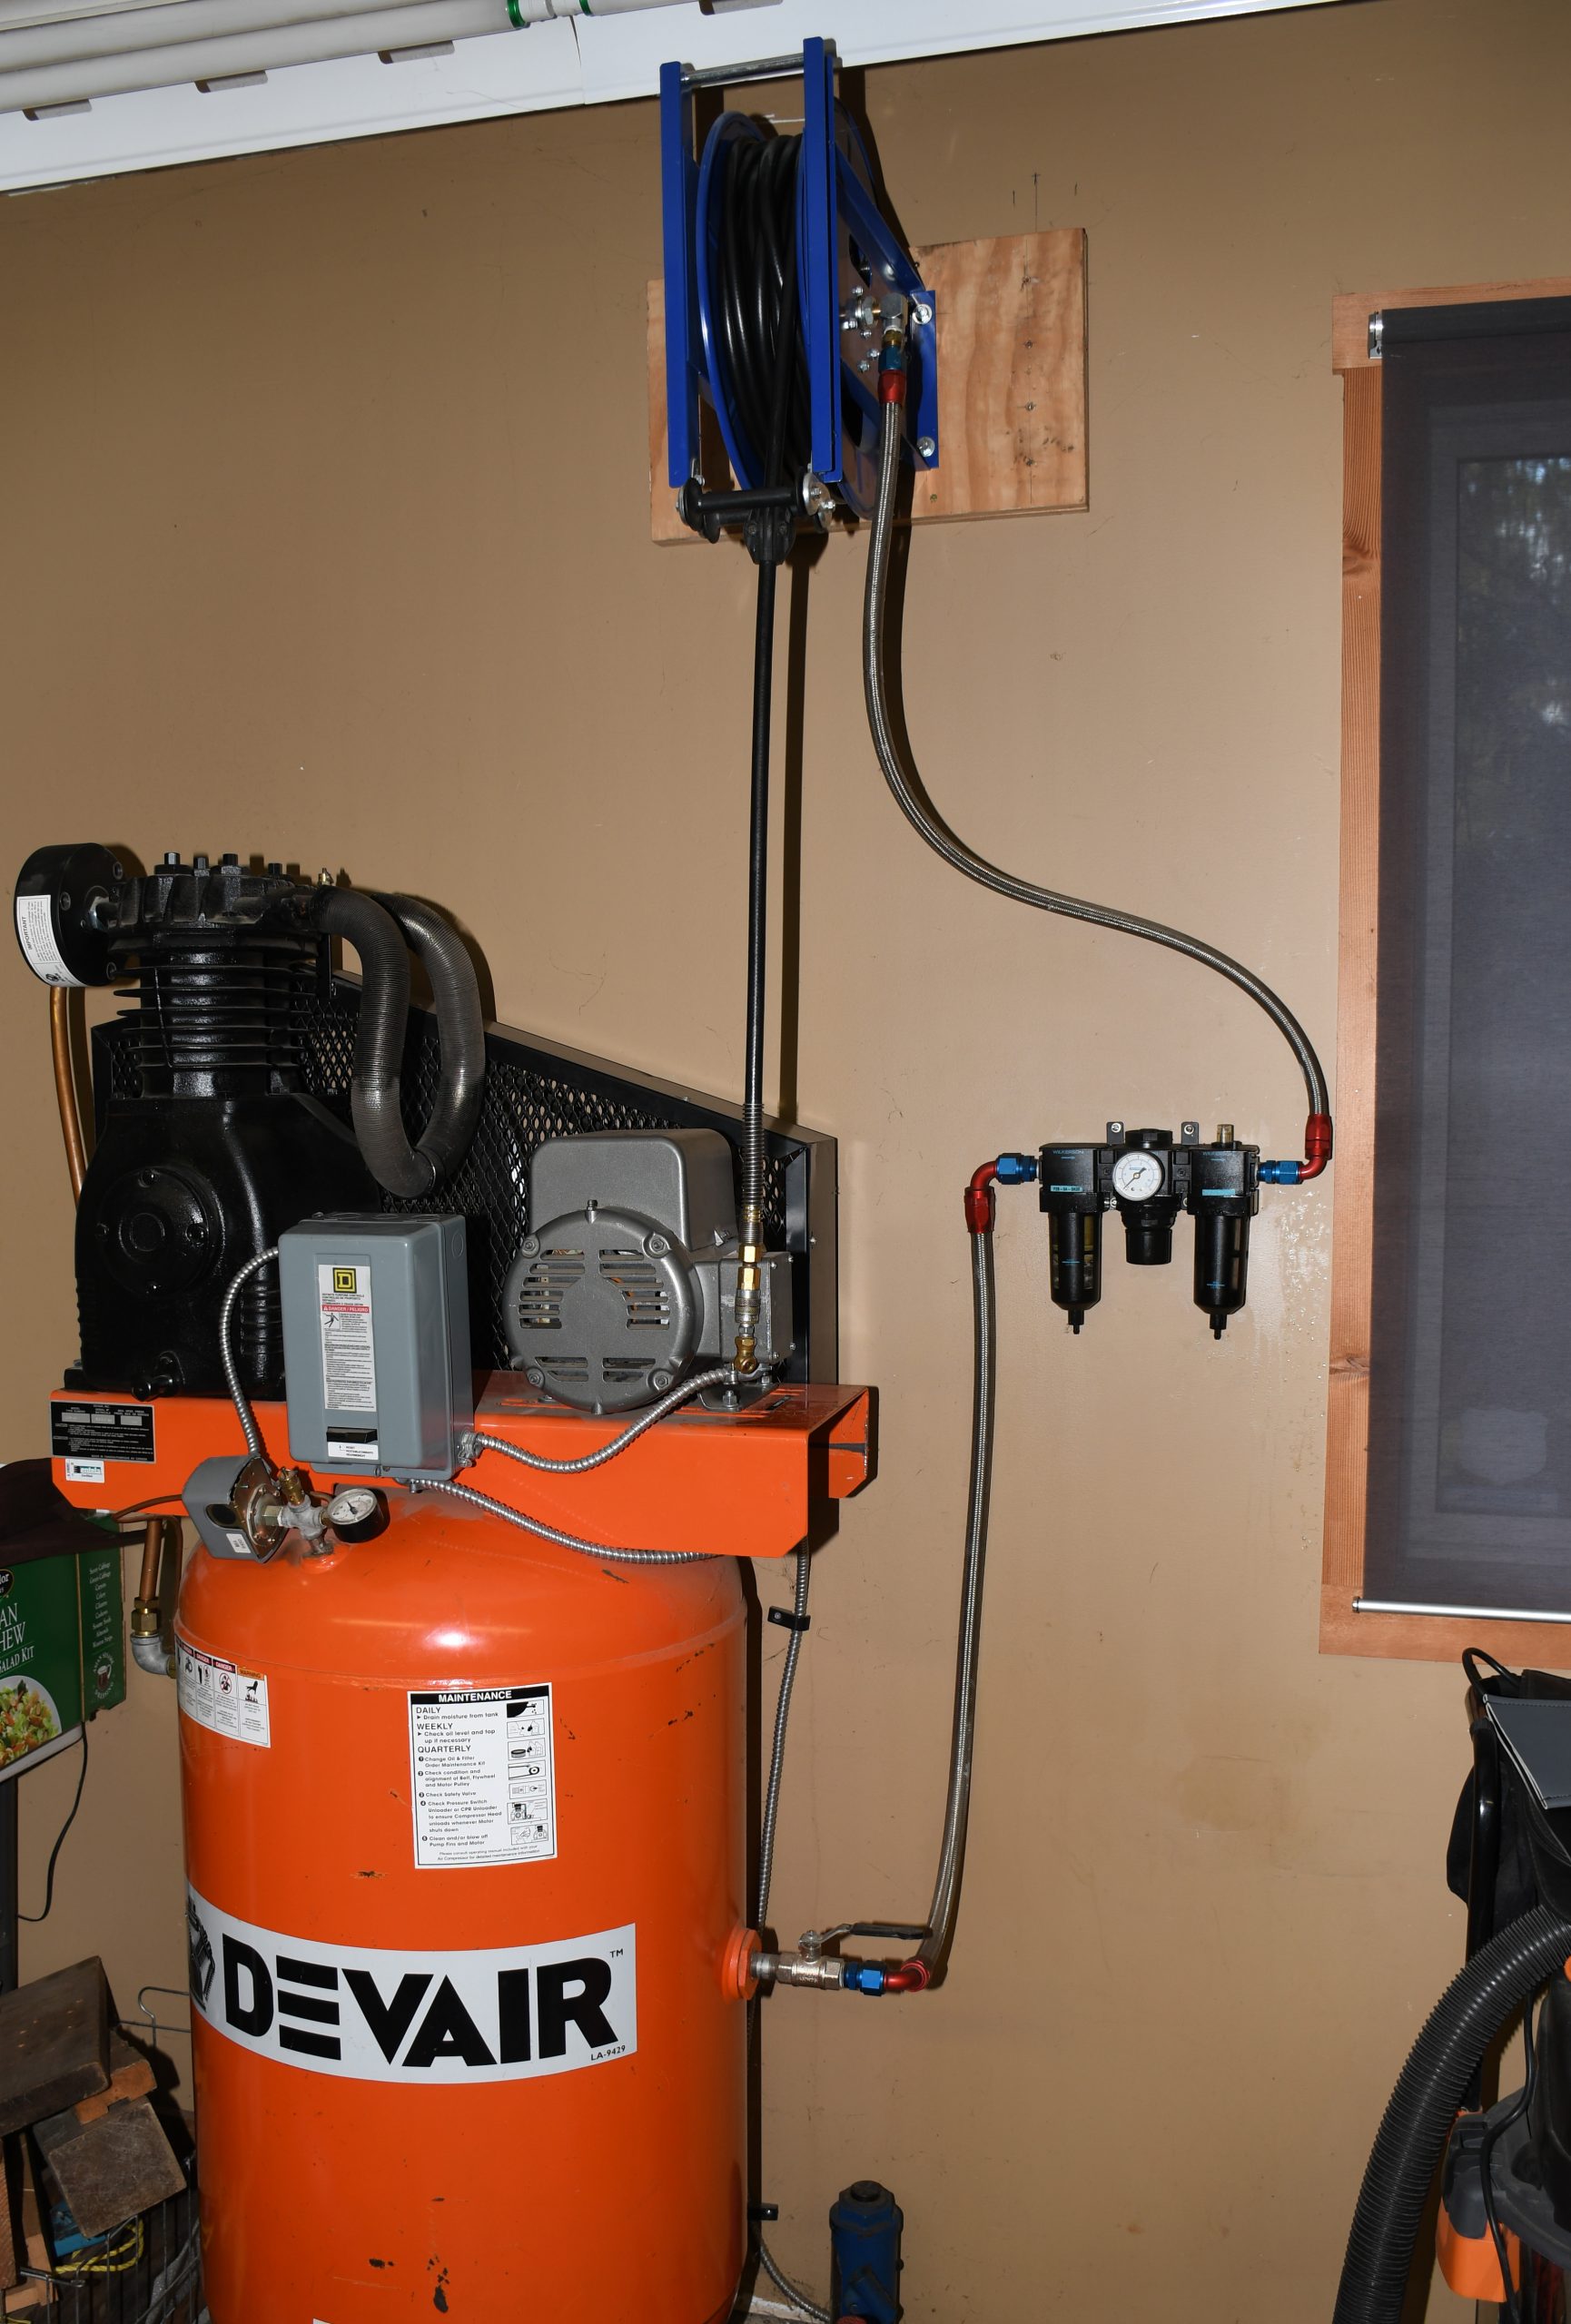 Essential Air Compressor Accessories: Oilers, Water Traps & Hose Reels